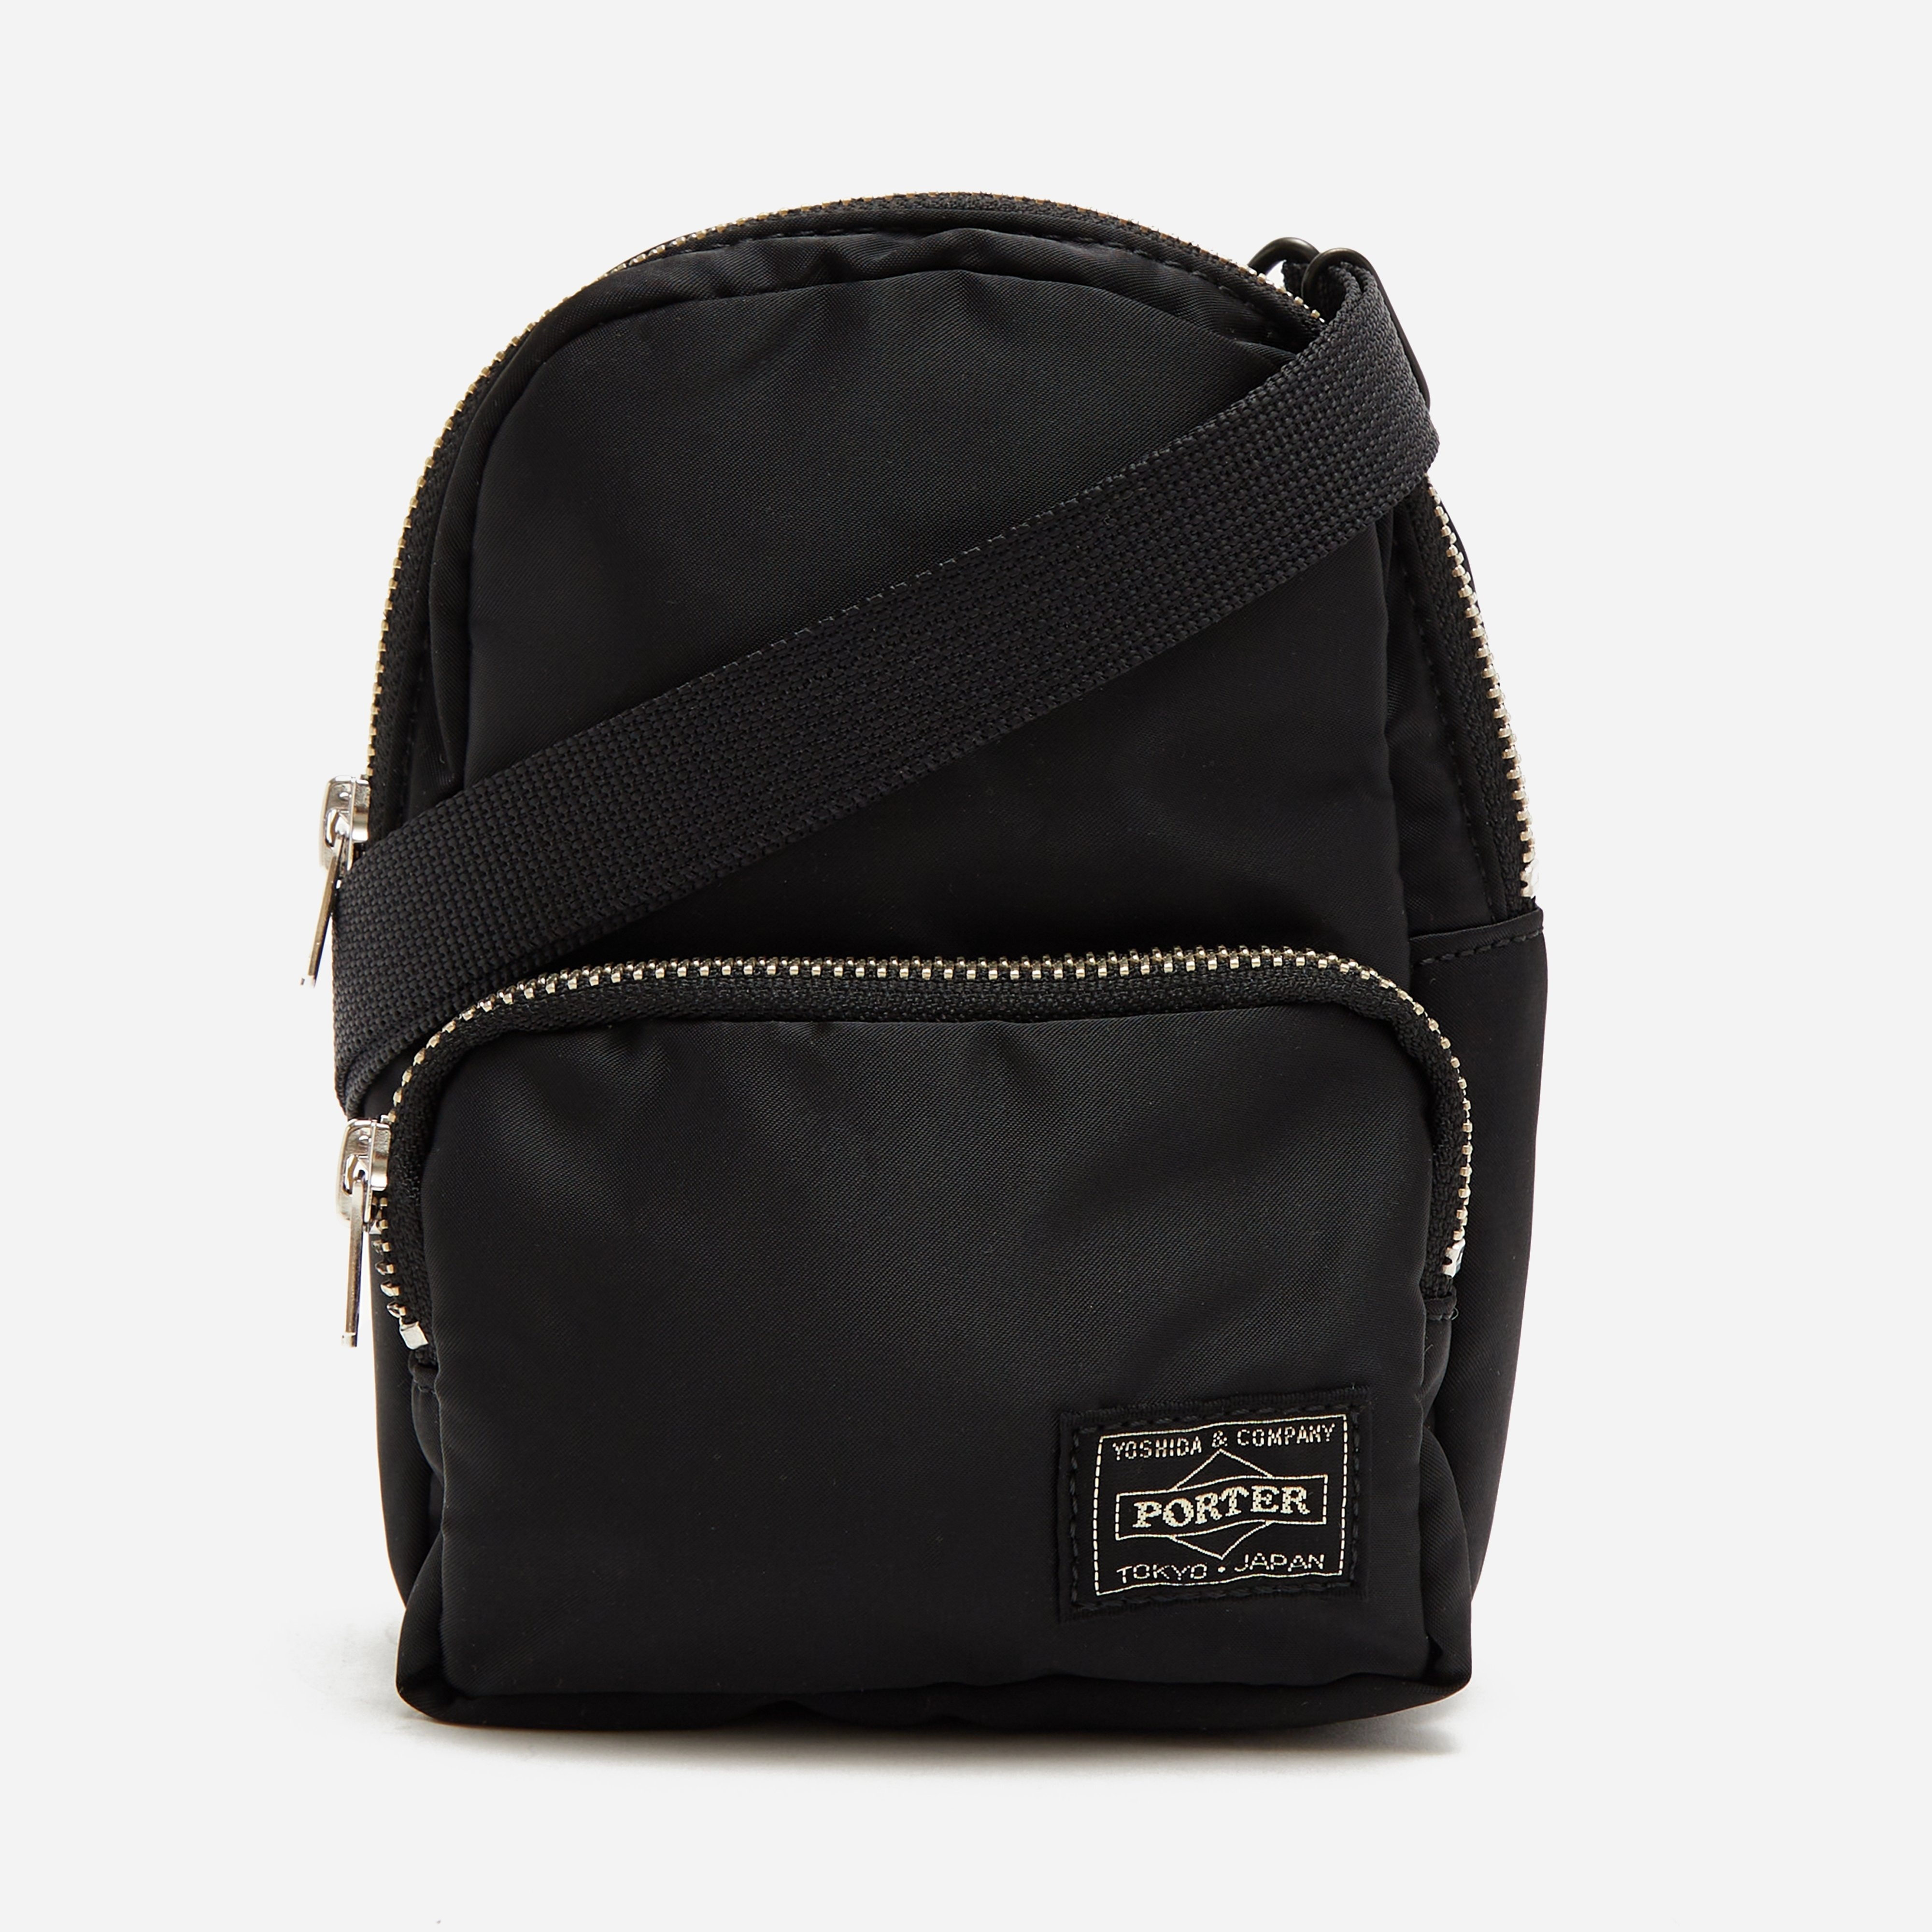 Porter-Yoshida & Co. HOWL Mini Daypack - 1